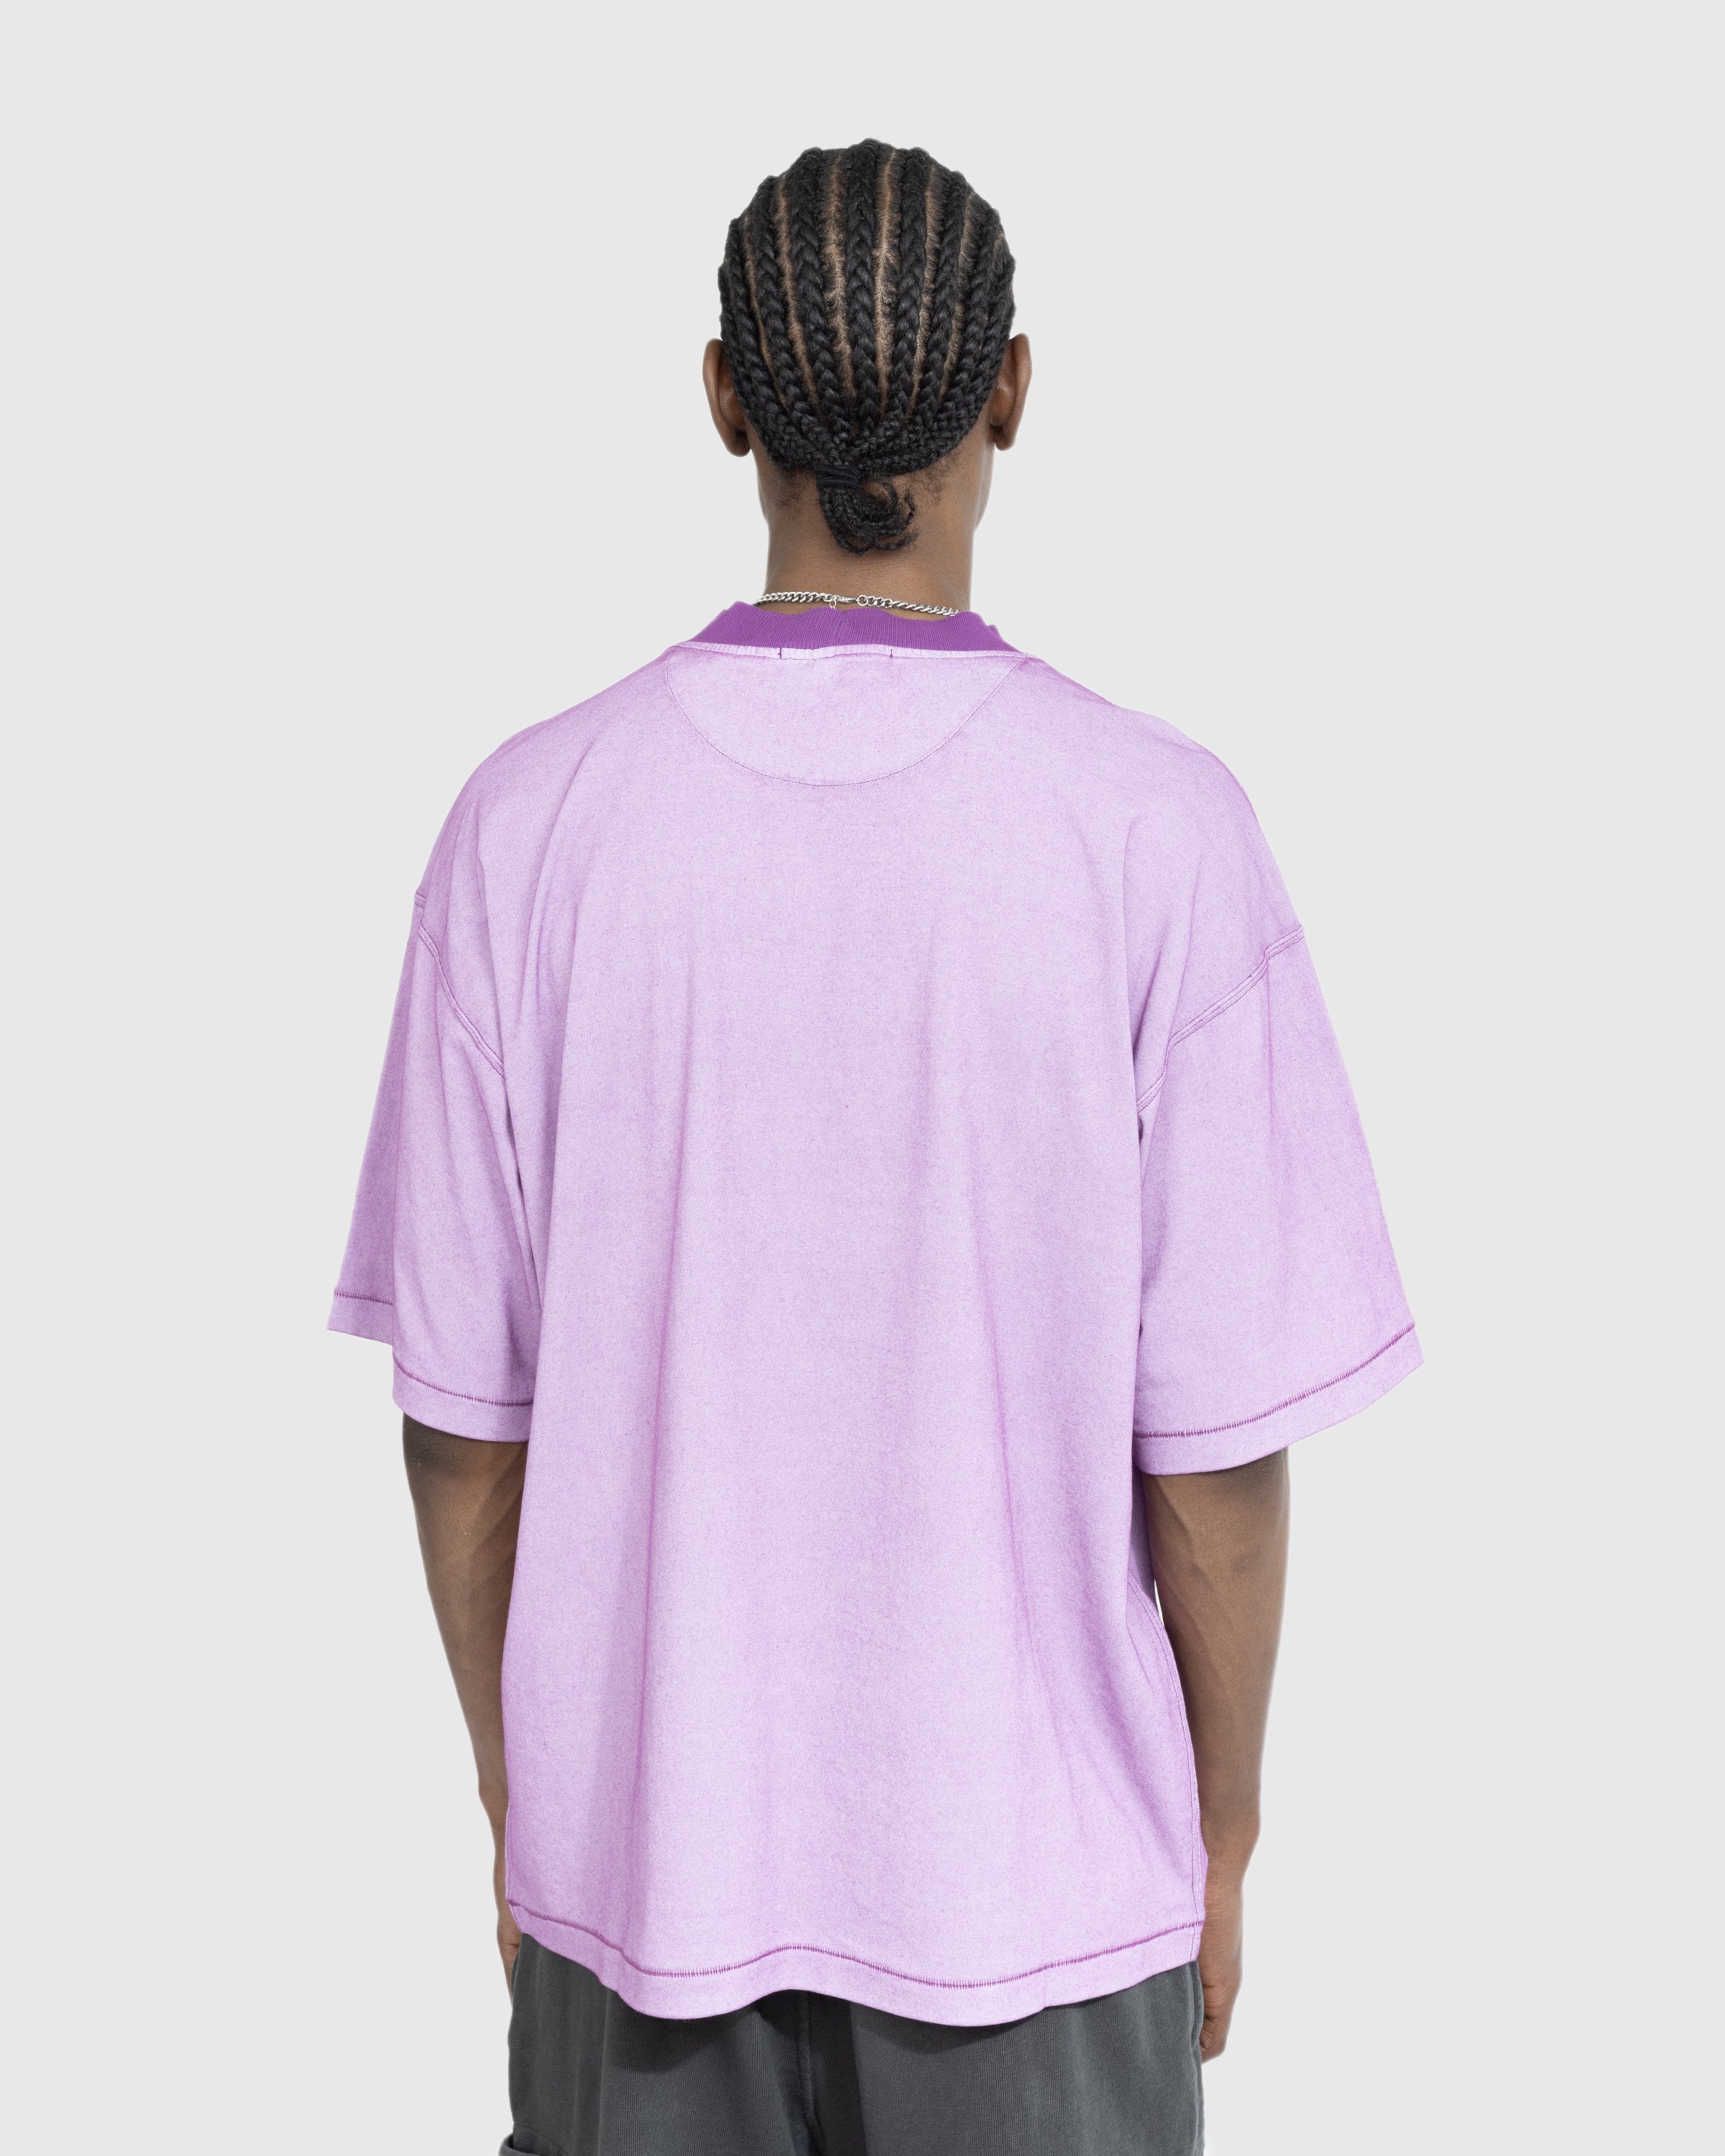 Stone Island - T-Shirt Pink 216X4 - Clothing - Pink - Image 3